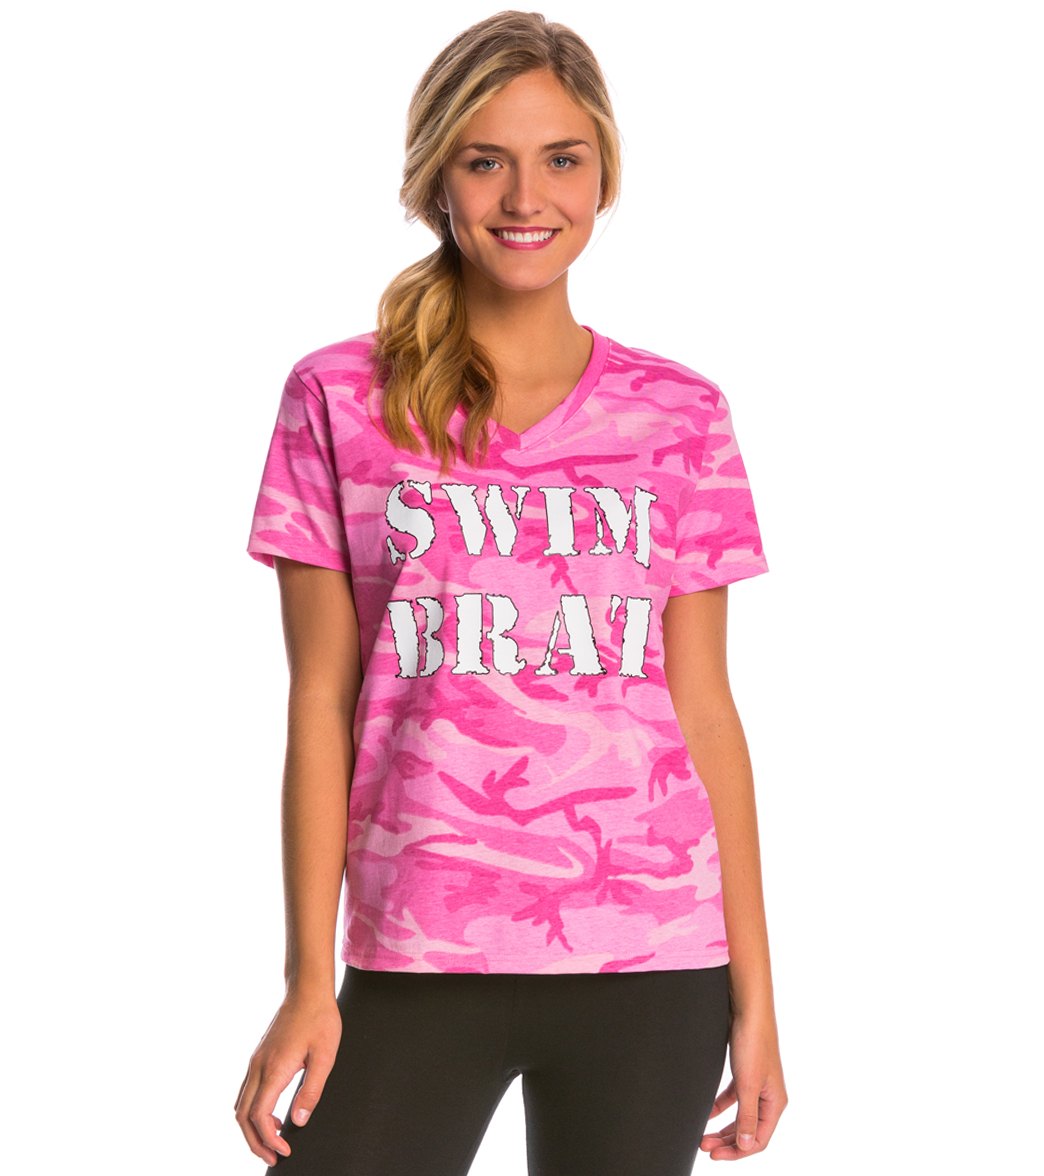 Ambro Manufacturing Women's Short Sleeve Swim Brat Tee Shirt - Pink Large Cotton - Swimoutlet.com